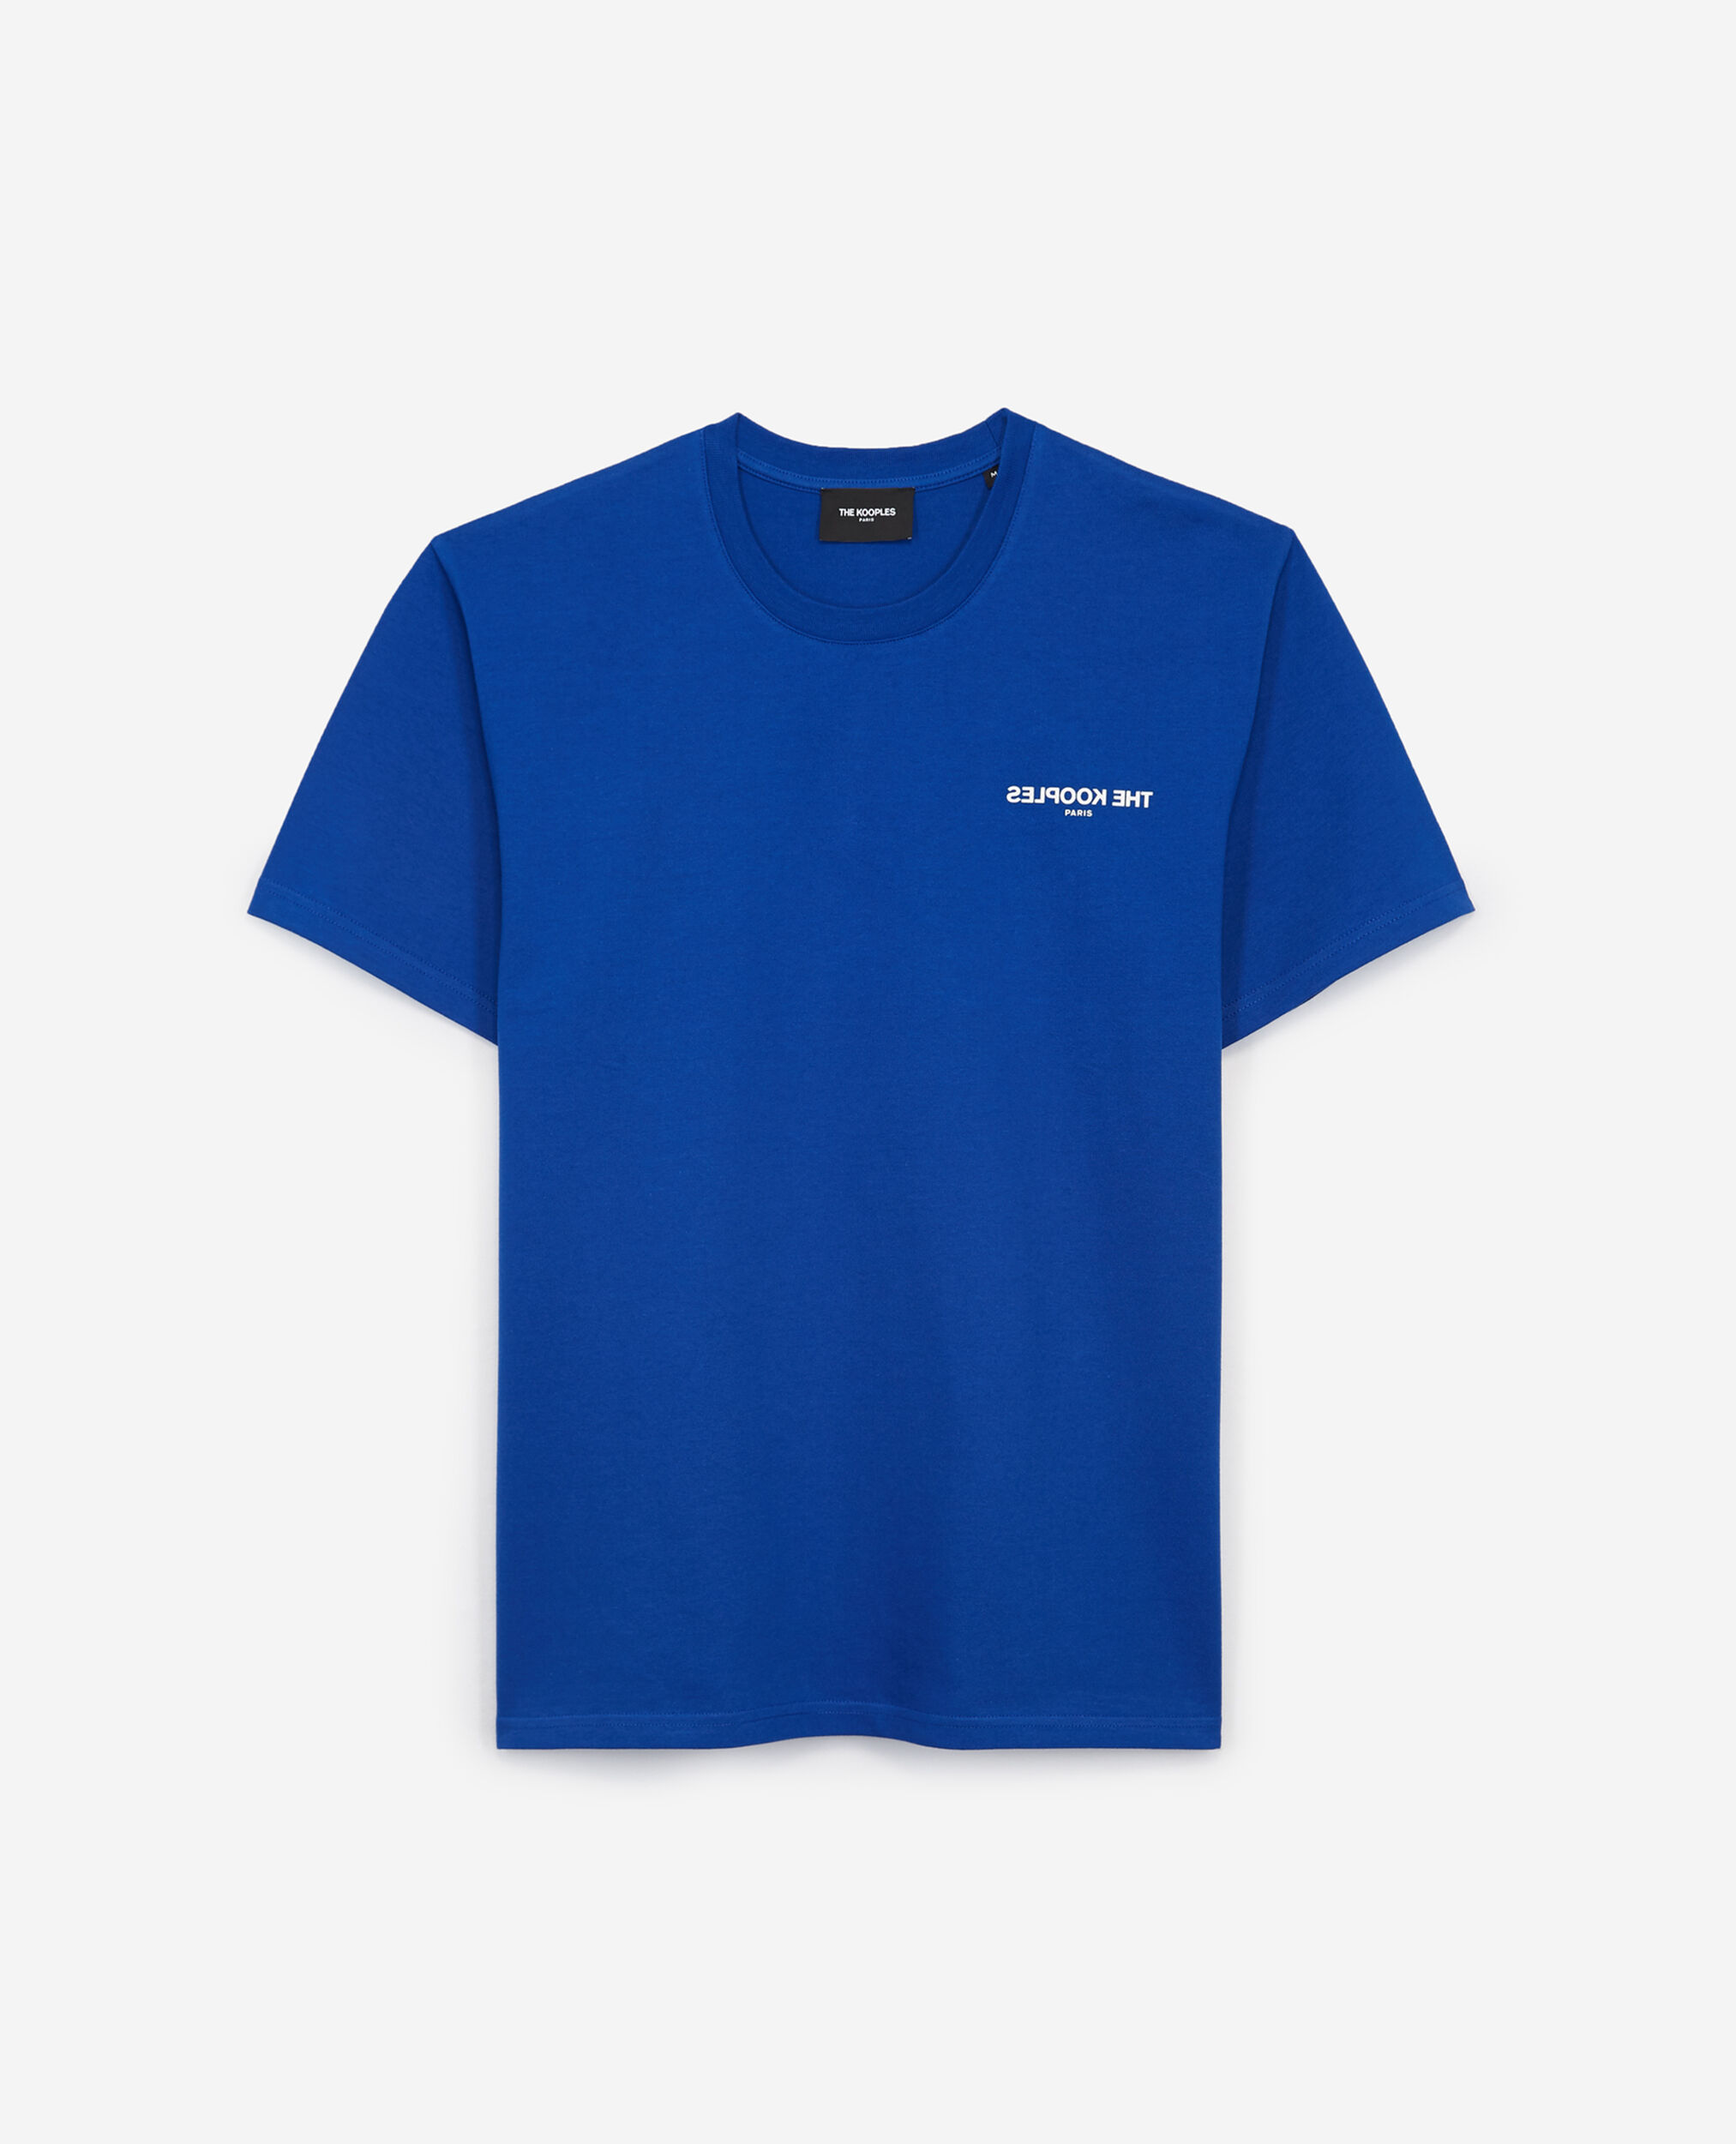 Camiseta algodón azul logotipo The Kooples, ELECTRIC BLUE, hi-res image number null